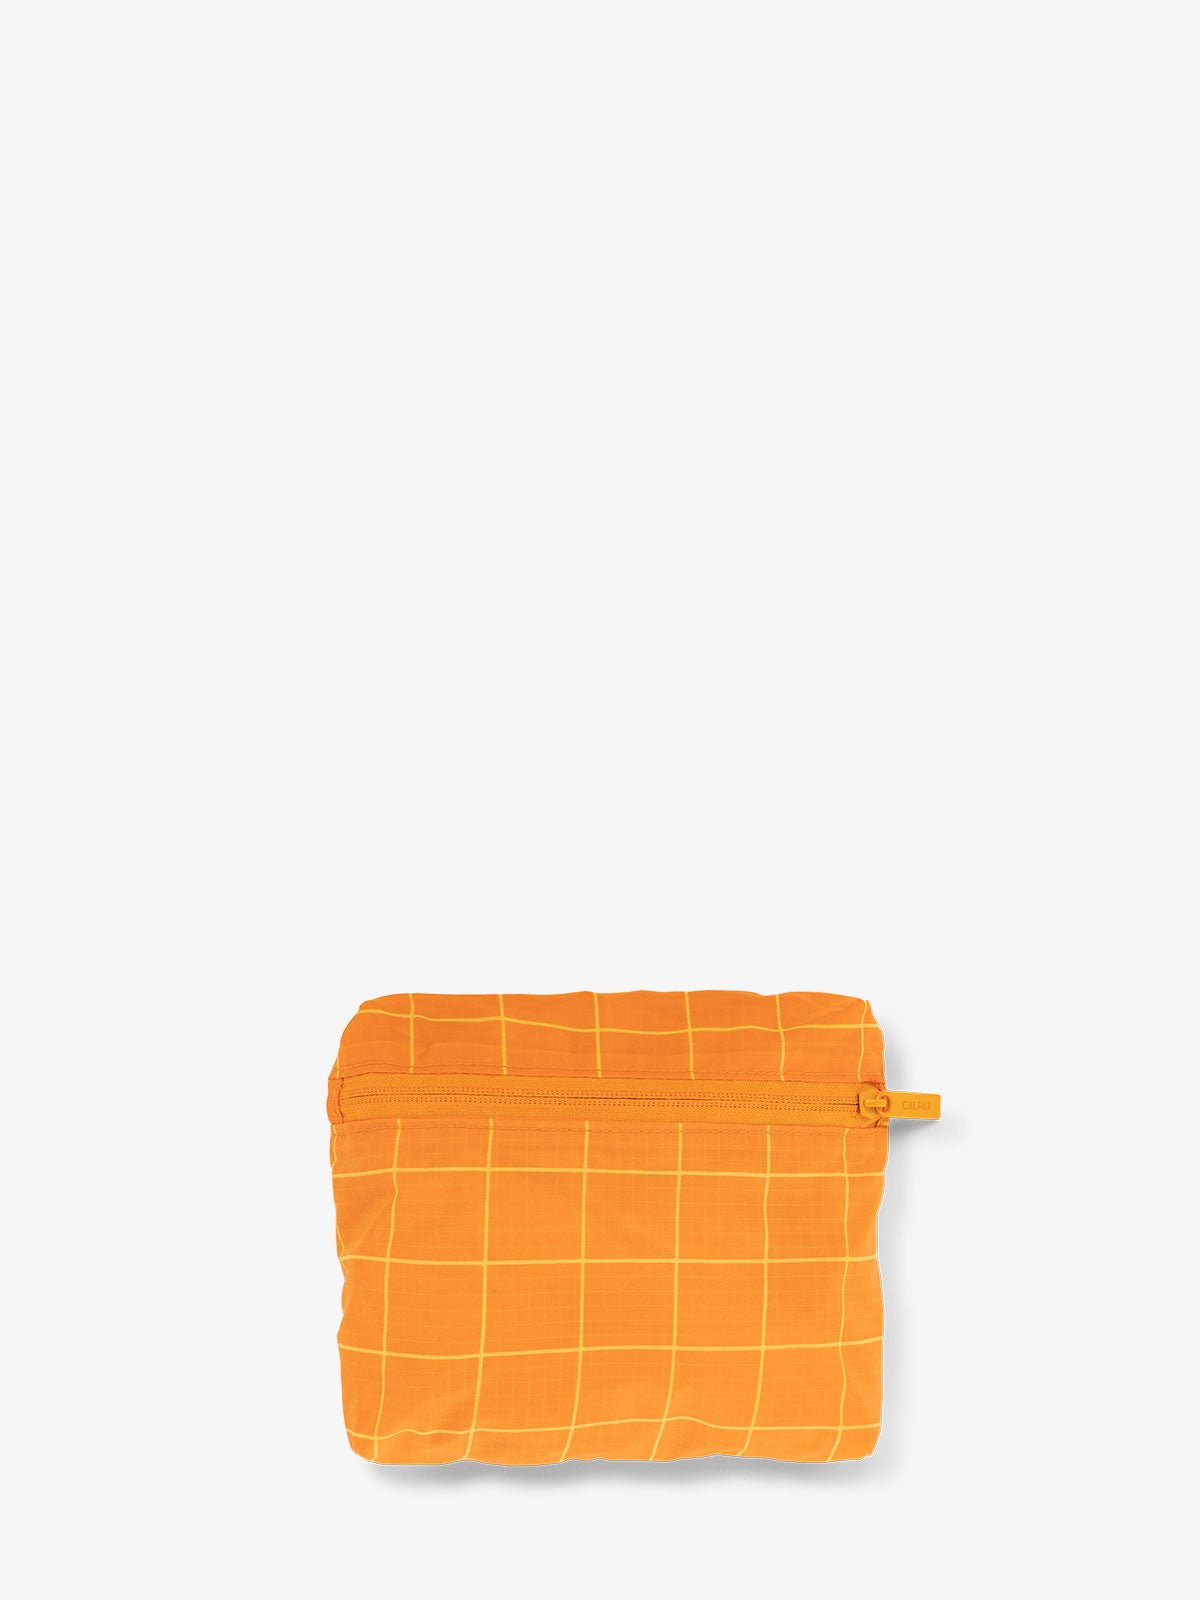 CALPAK Compakt foldable tote bag in orange grid